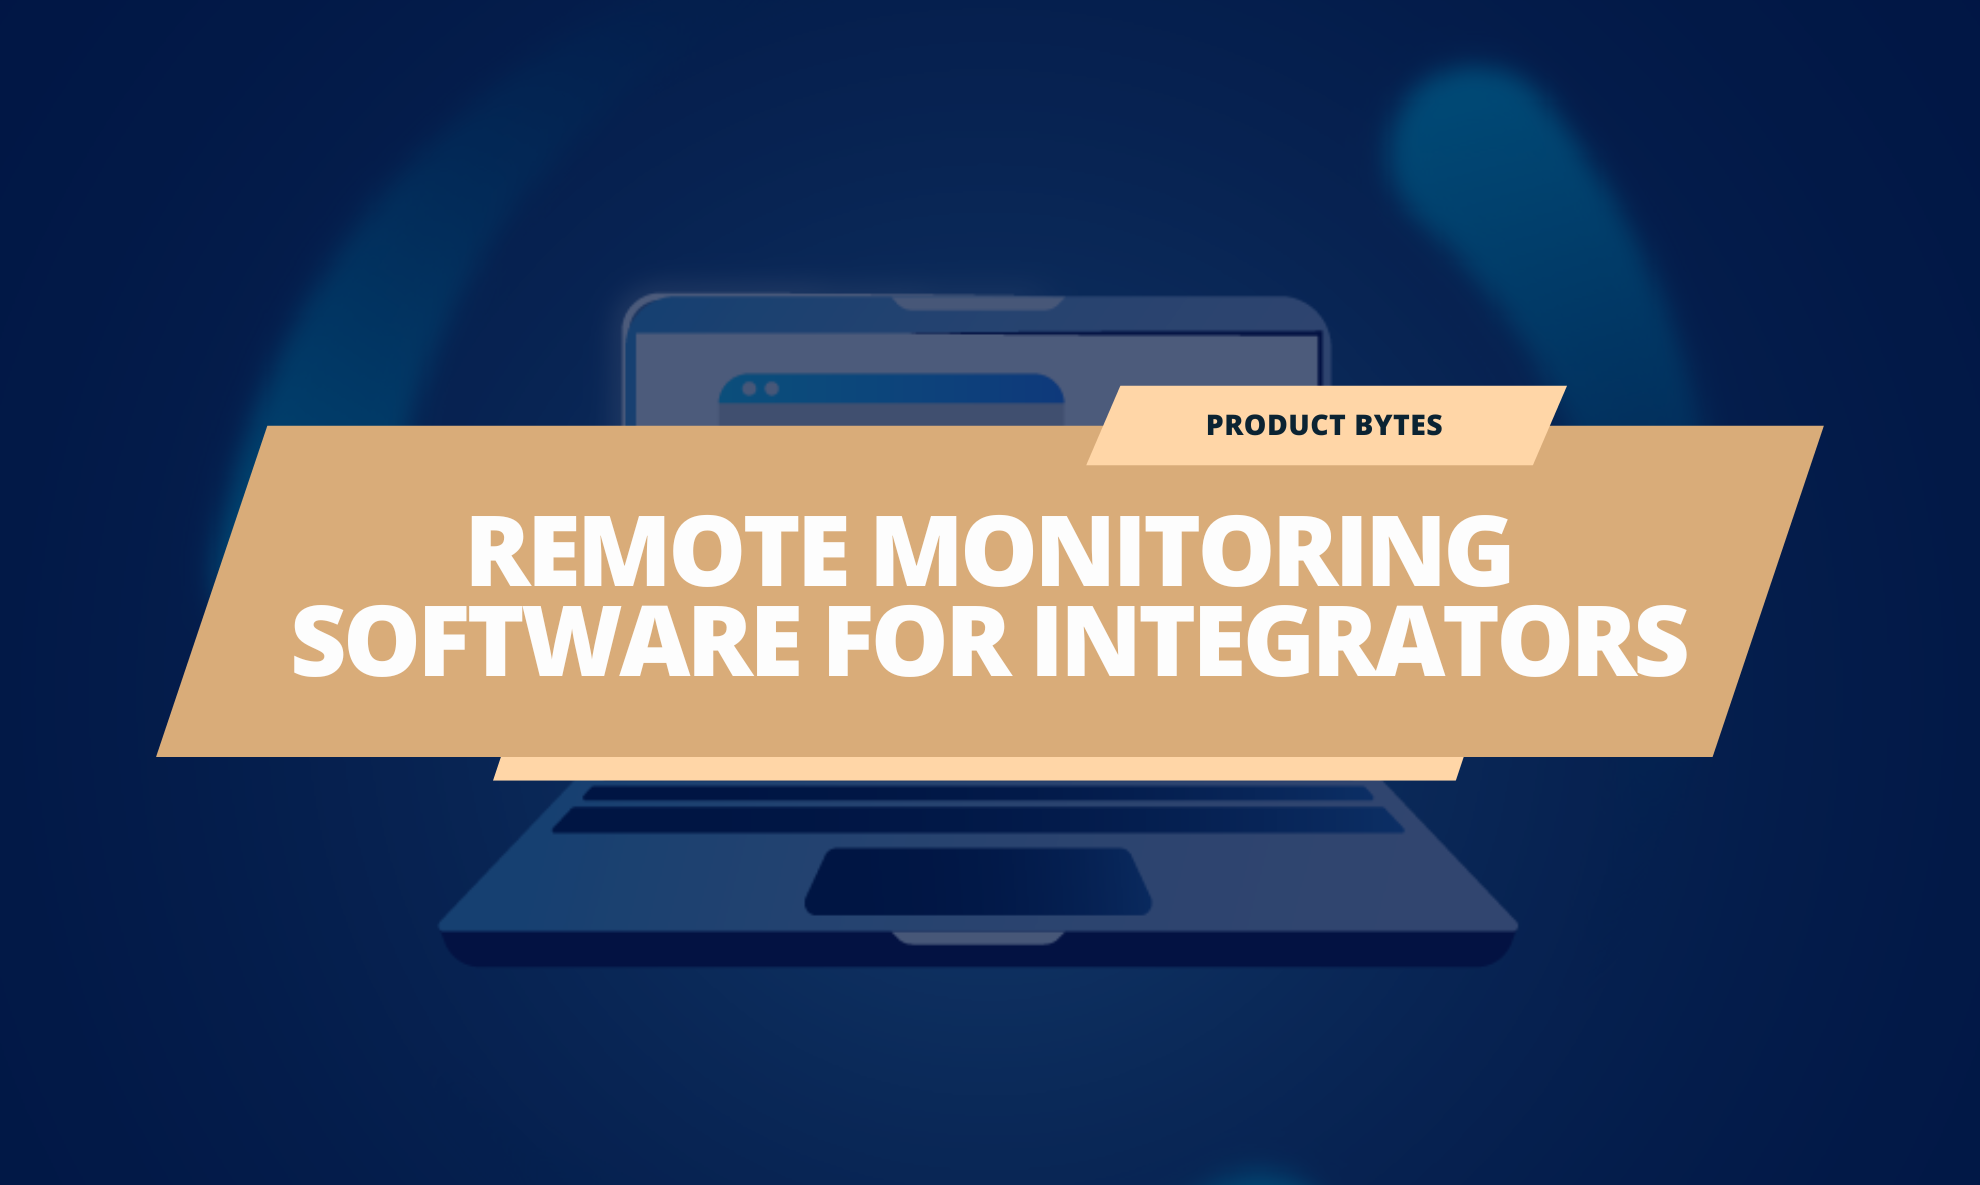 Remote Monitoring Software to help Integrators Work Smarter